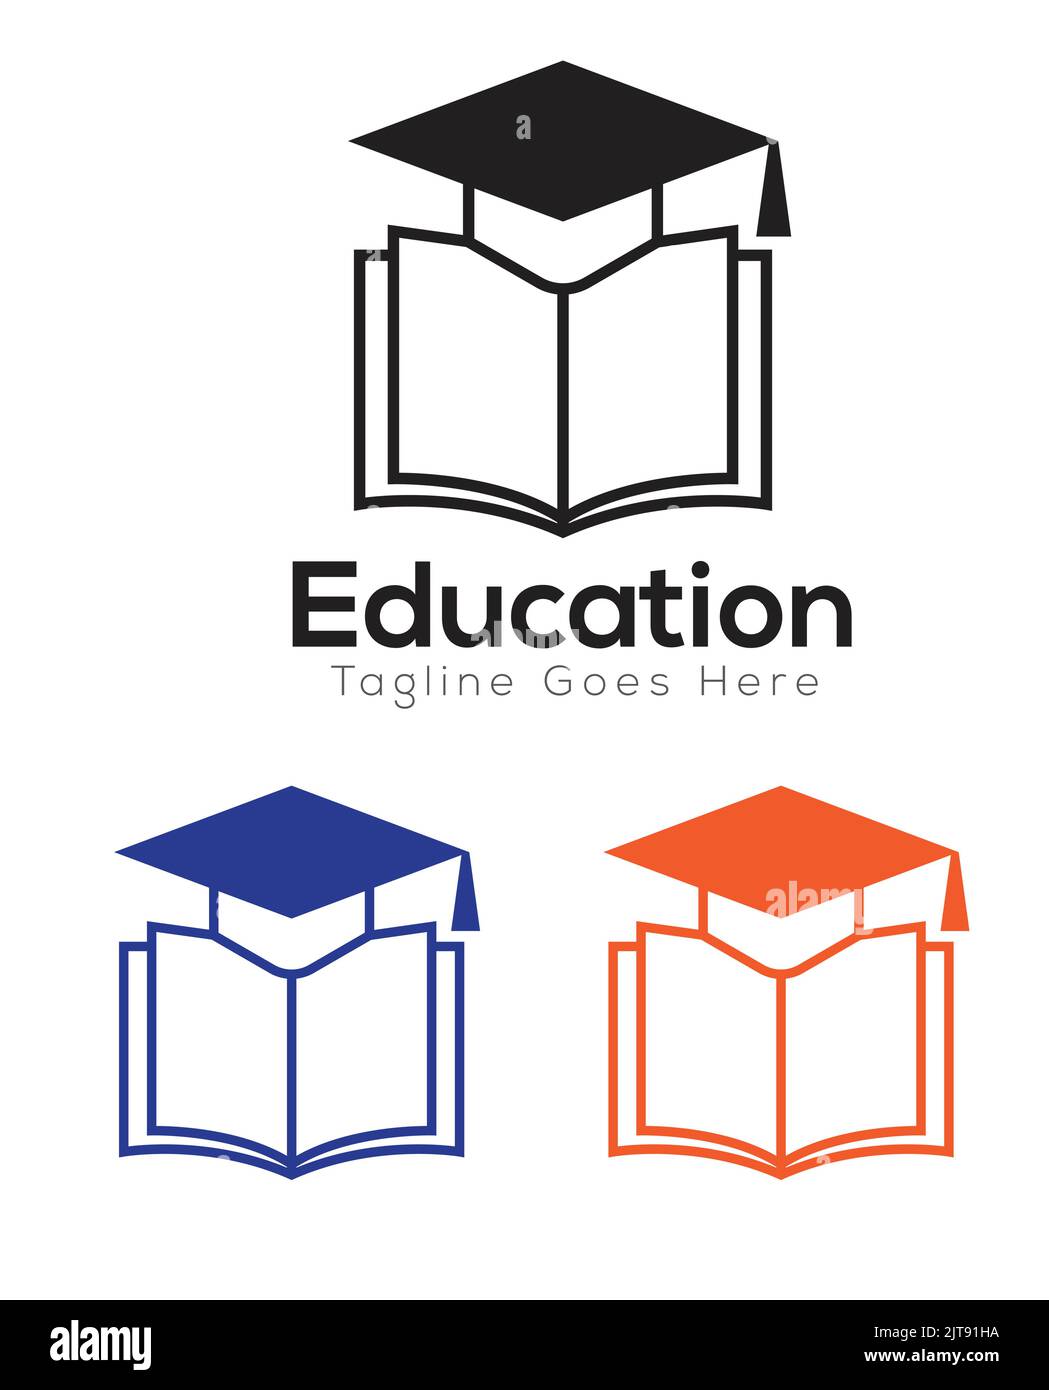 graduate education logo with graduation cap and book symbol in three color vector logo illustration Stock Vector